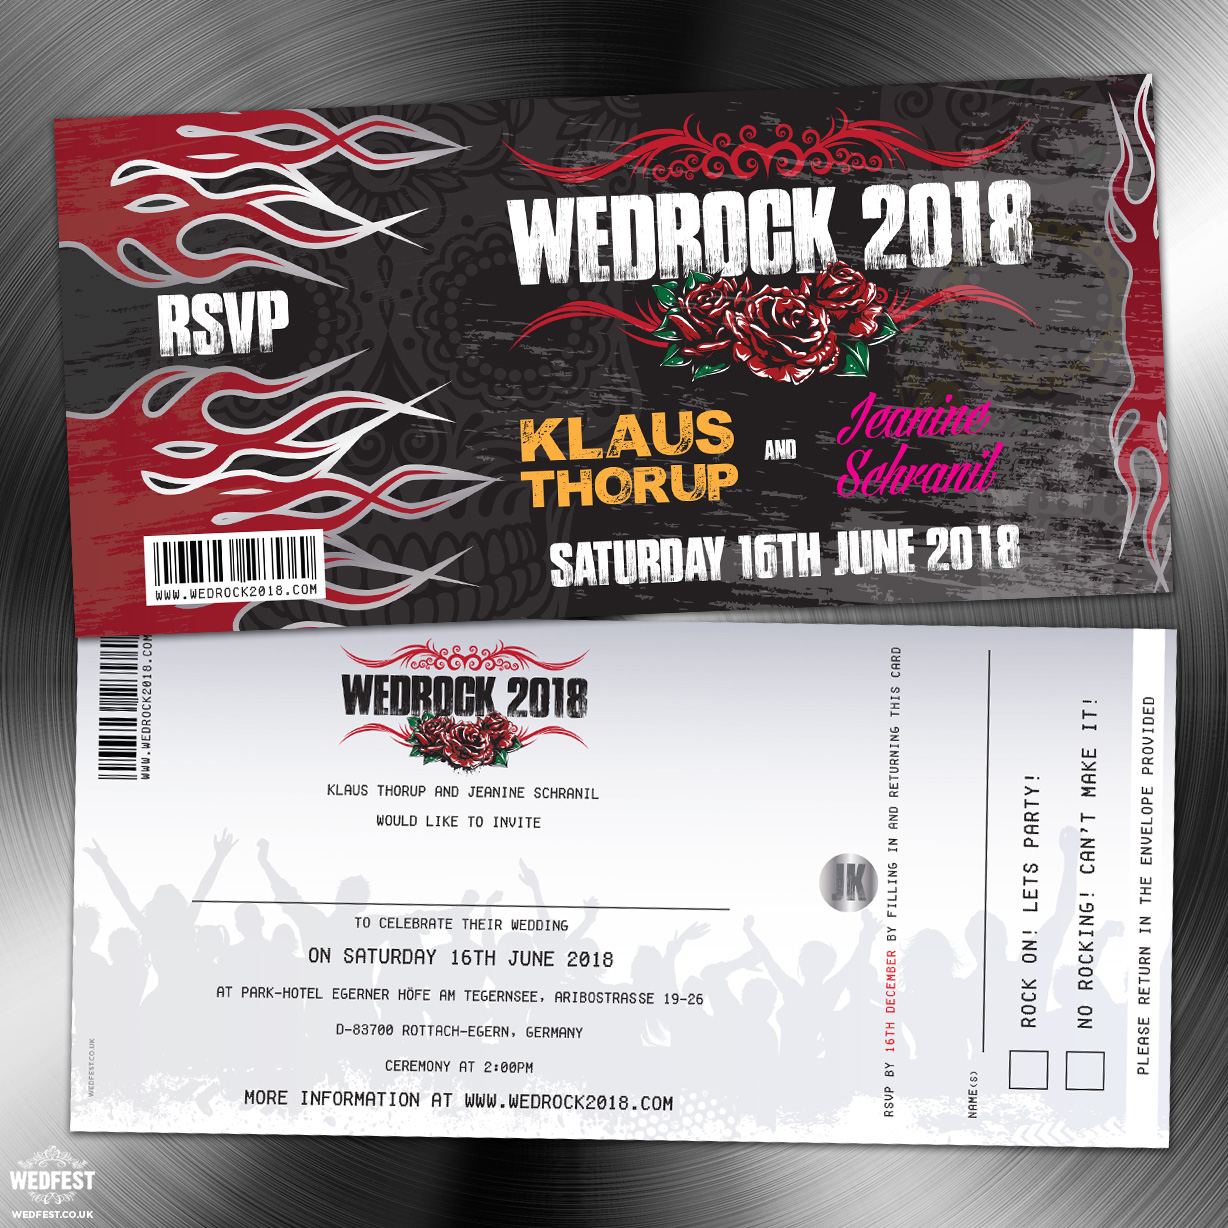 wedrock rock n roll wedding invitations